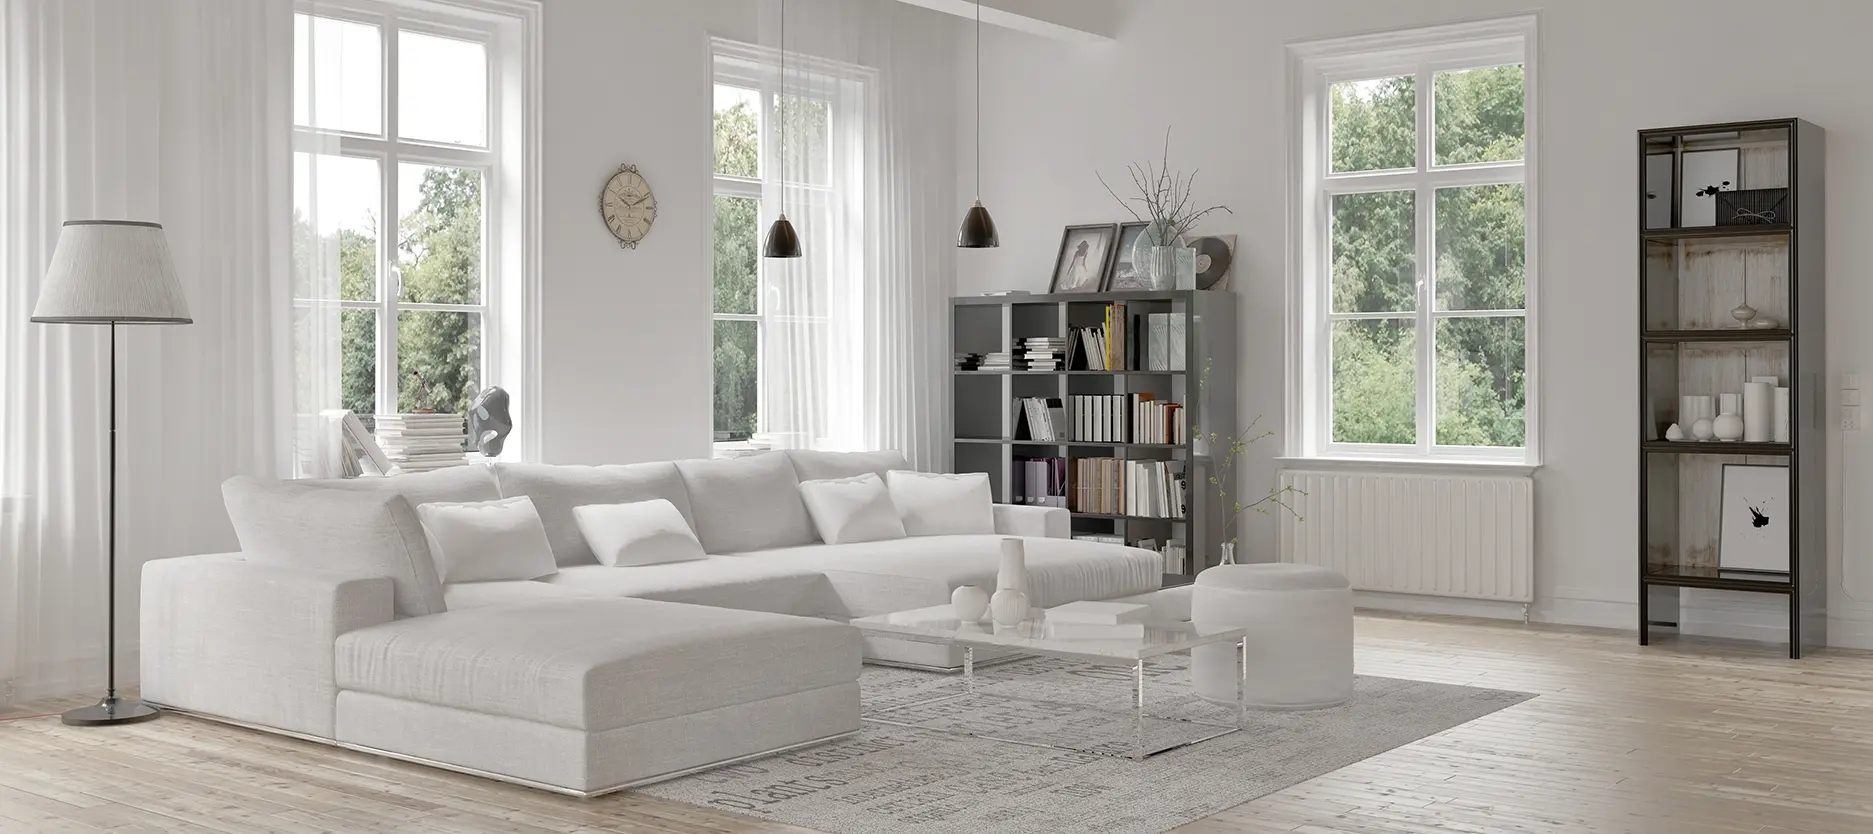 Neutrals on neutrals: Classic living room colour combination